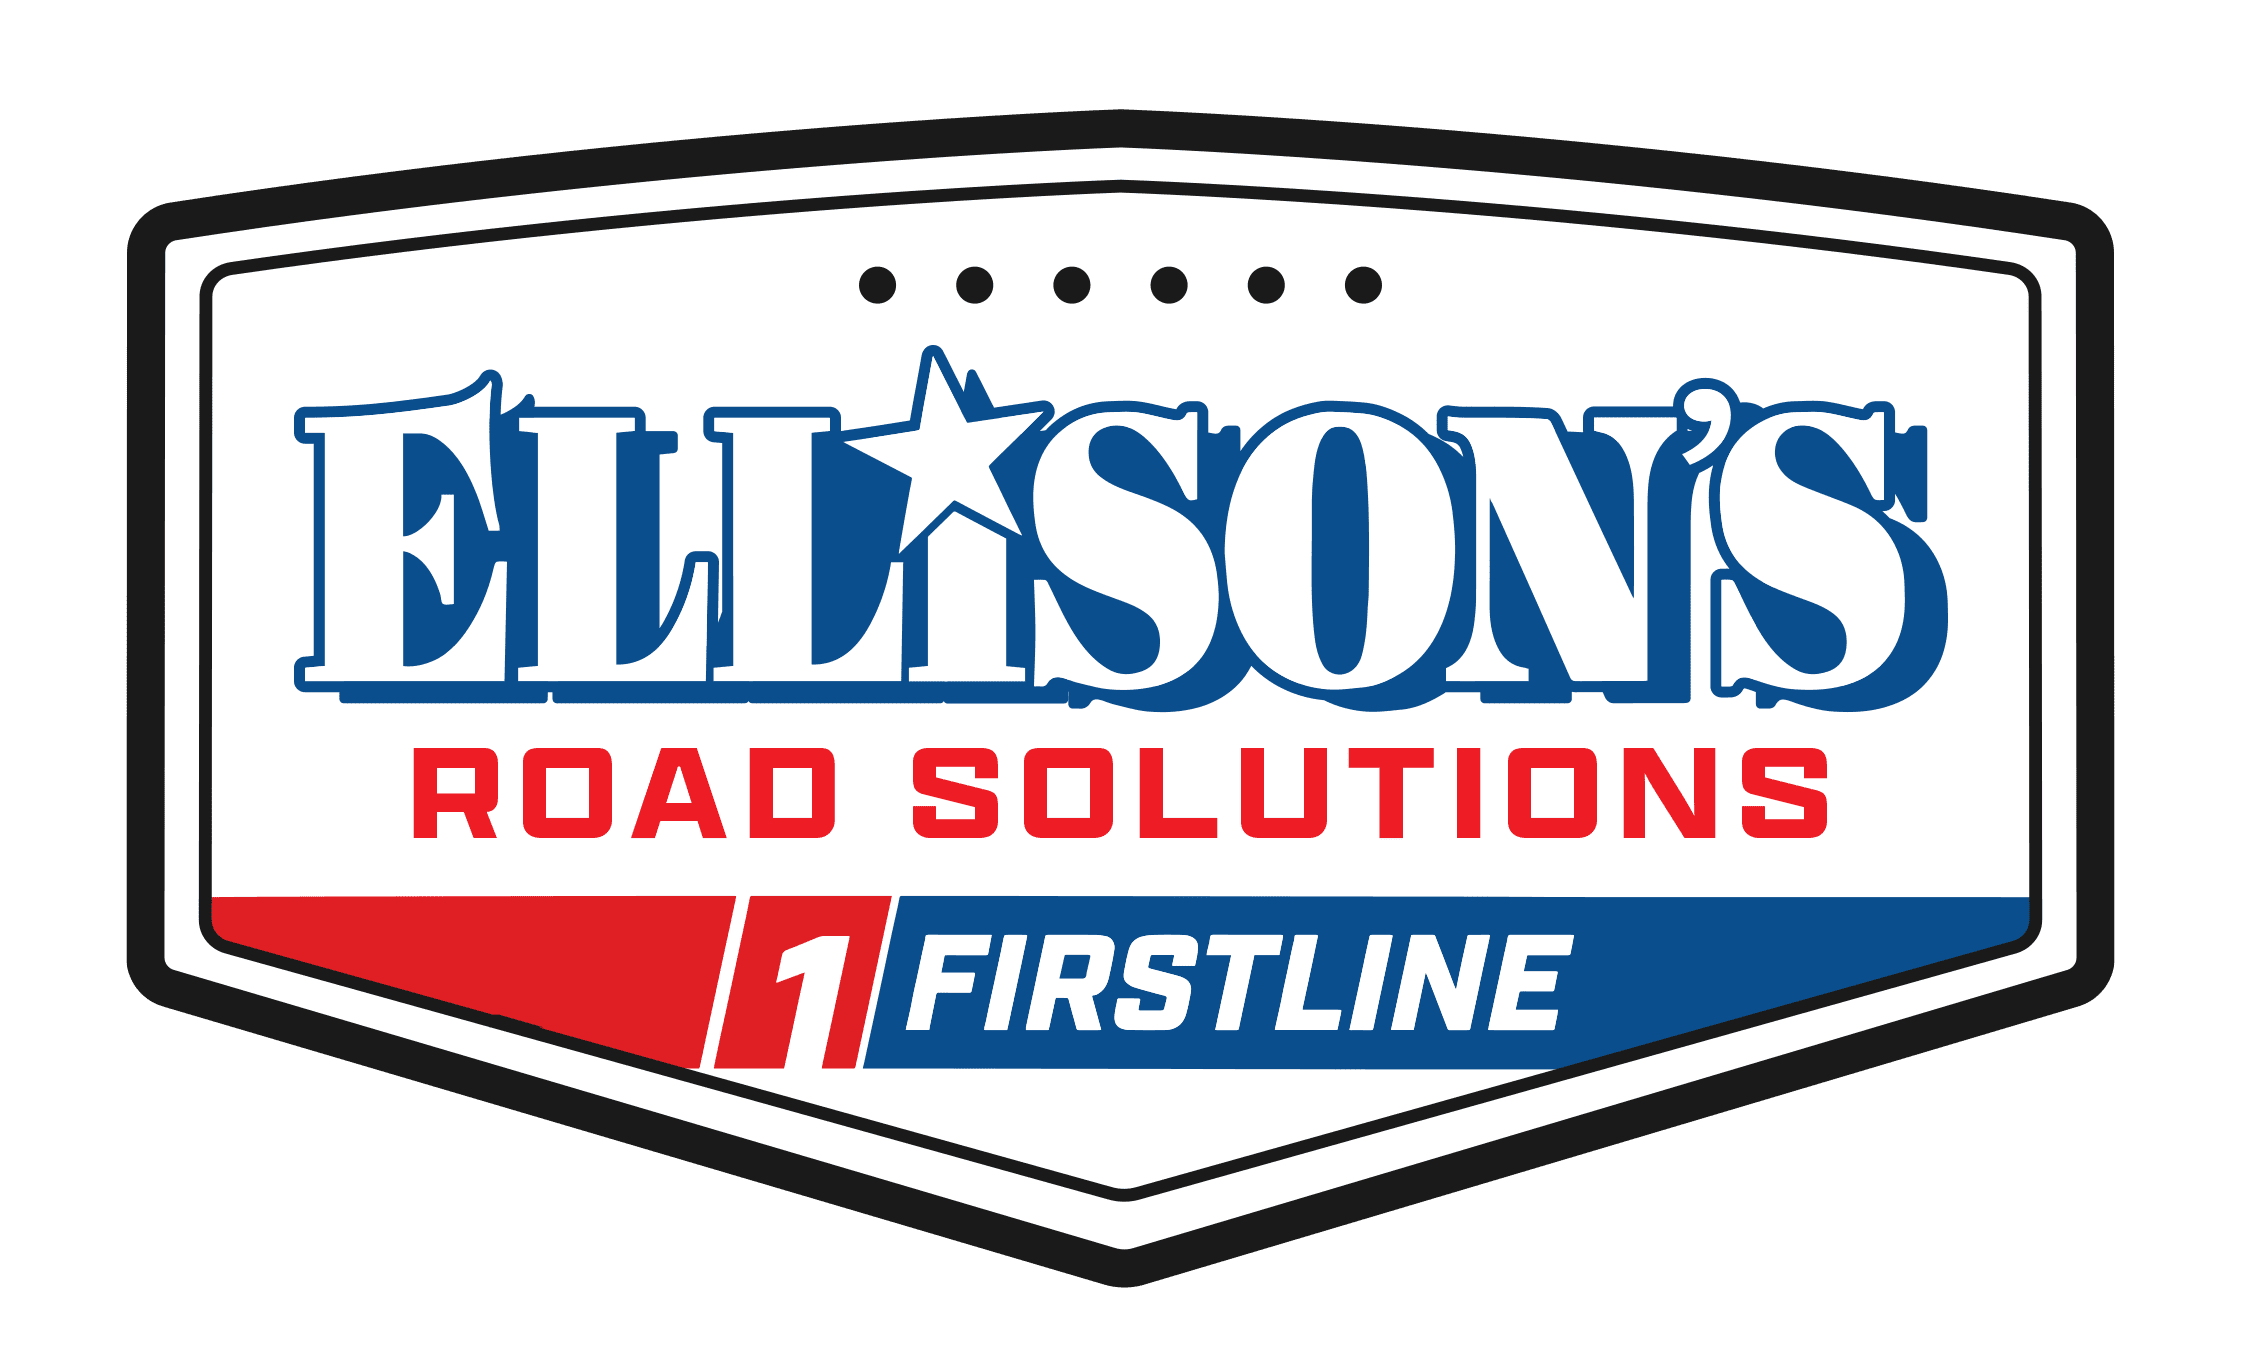 Ellisonsroadsolutions Badge